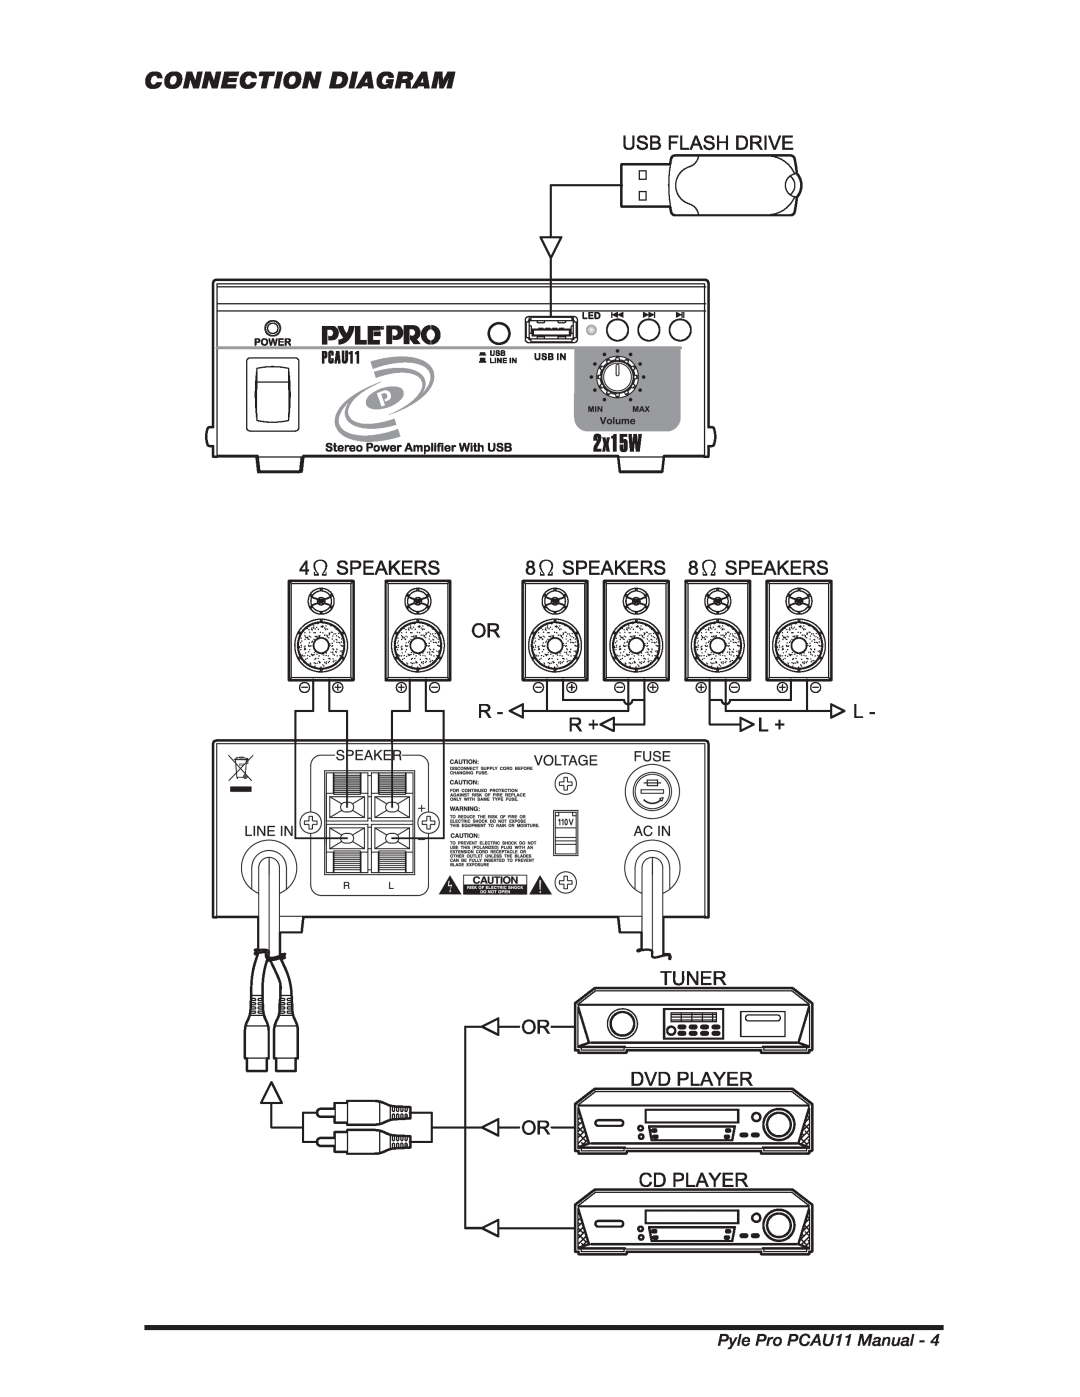 PYLE Audio manual Connection Diagram, Pyle Pro PCAU11 Manual 